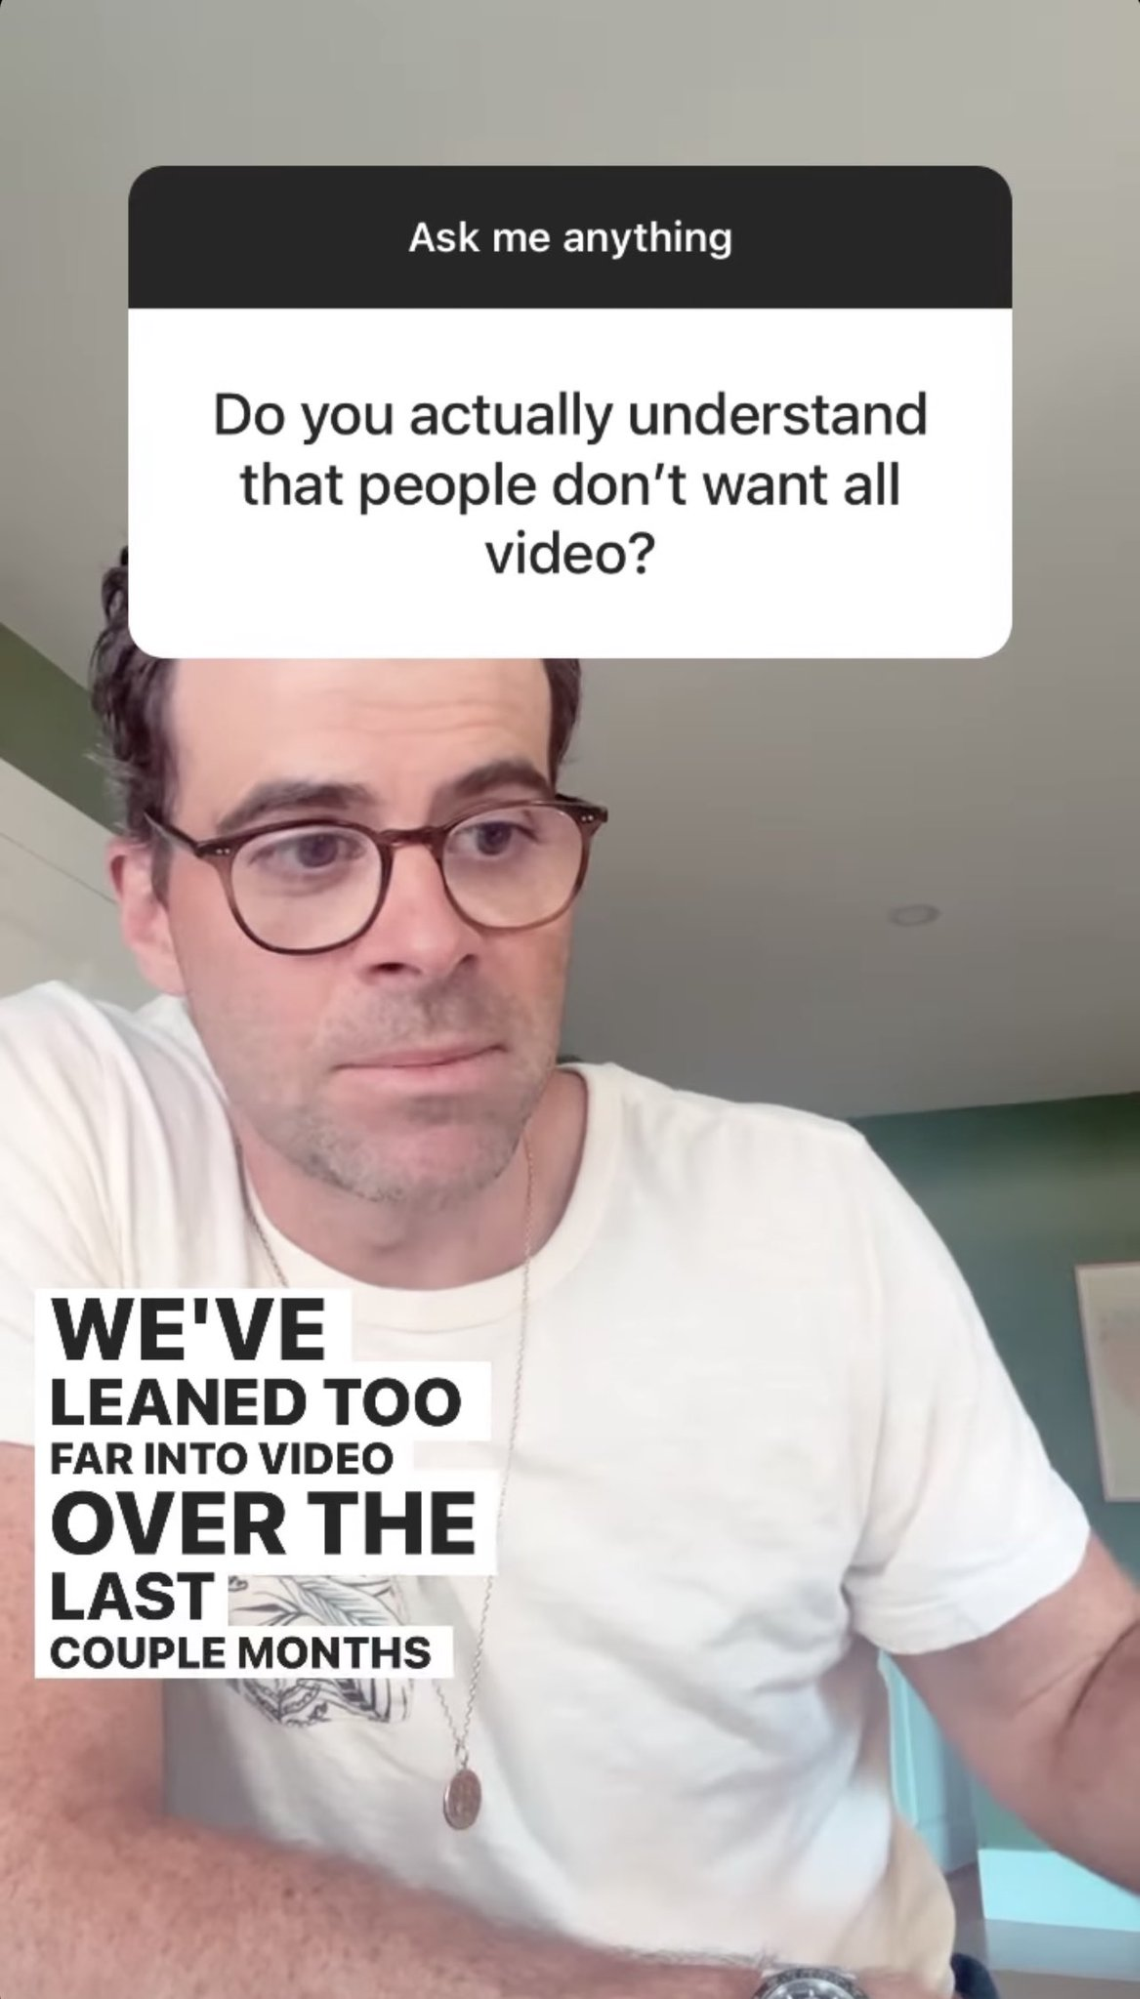 Instagram CEO discussing video